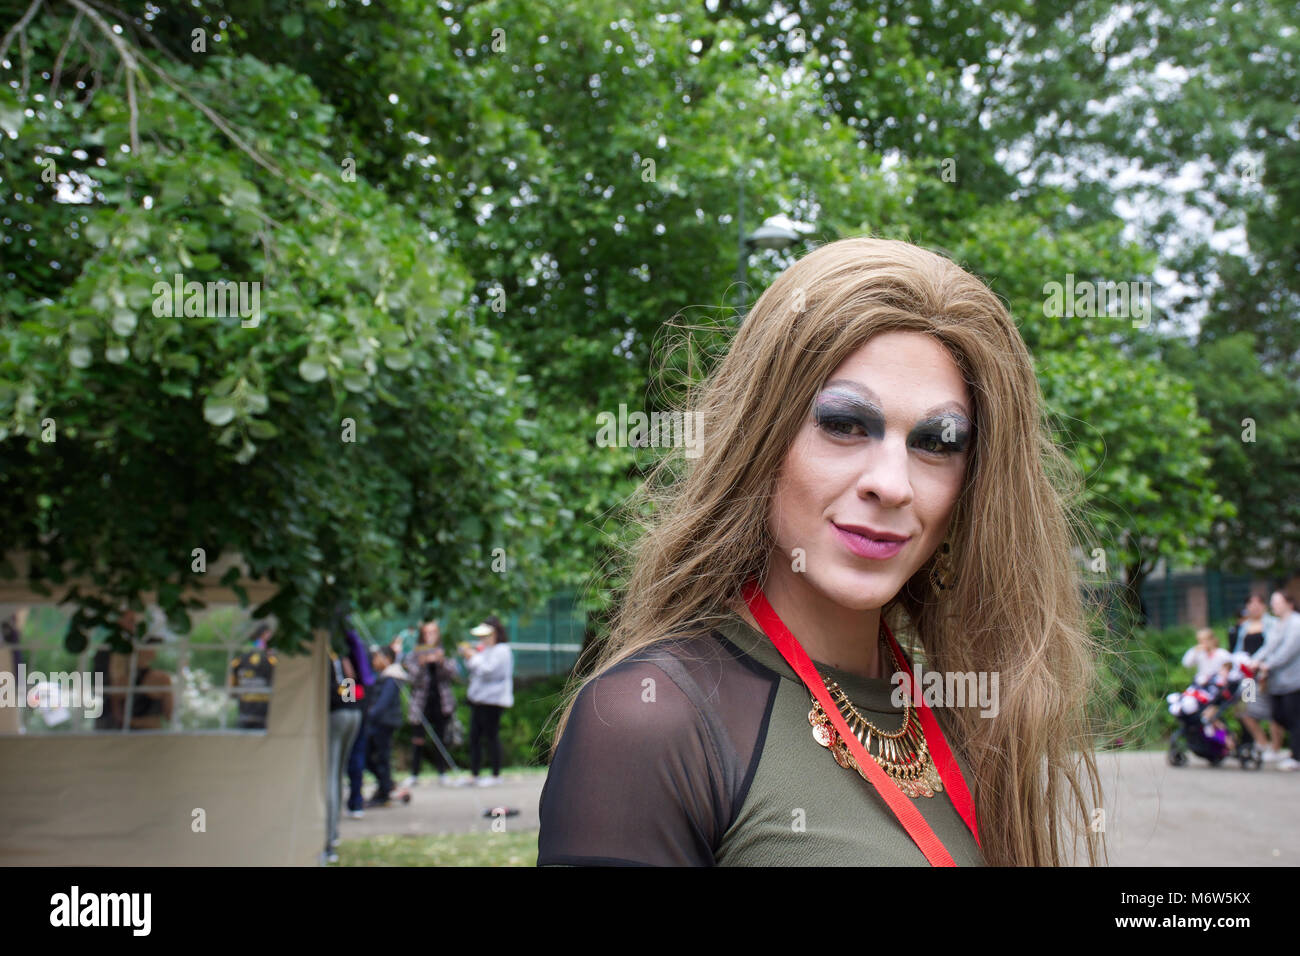 Breaking male gender stereotype,Transgender Uk,LGBT.Man wearing makeup.LGBT Pride event,Stoke on Trent,Staffordshire,United Kingdom.24 June 2017. Stock Photo